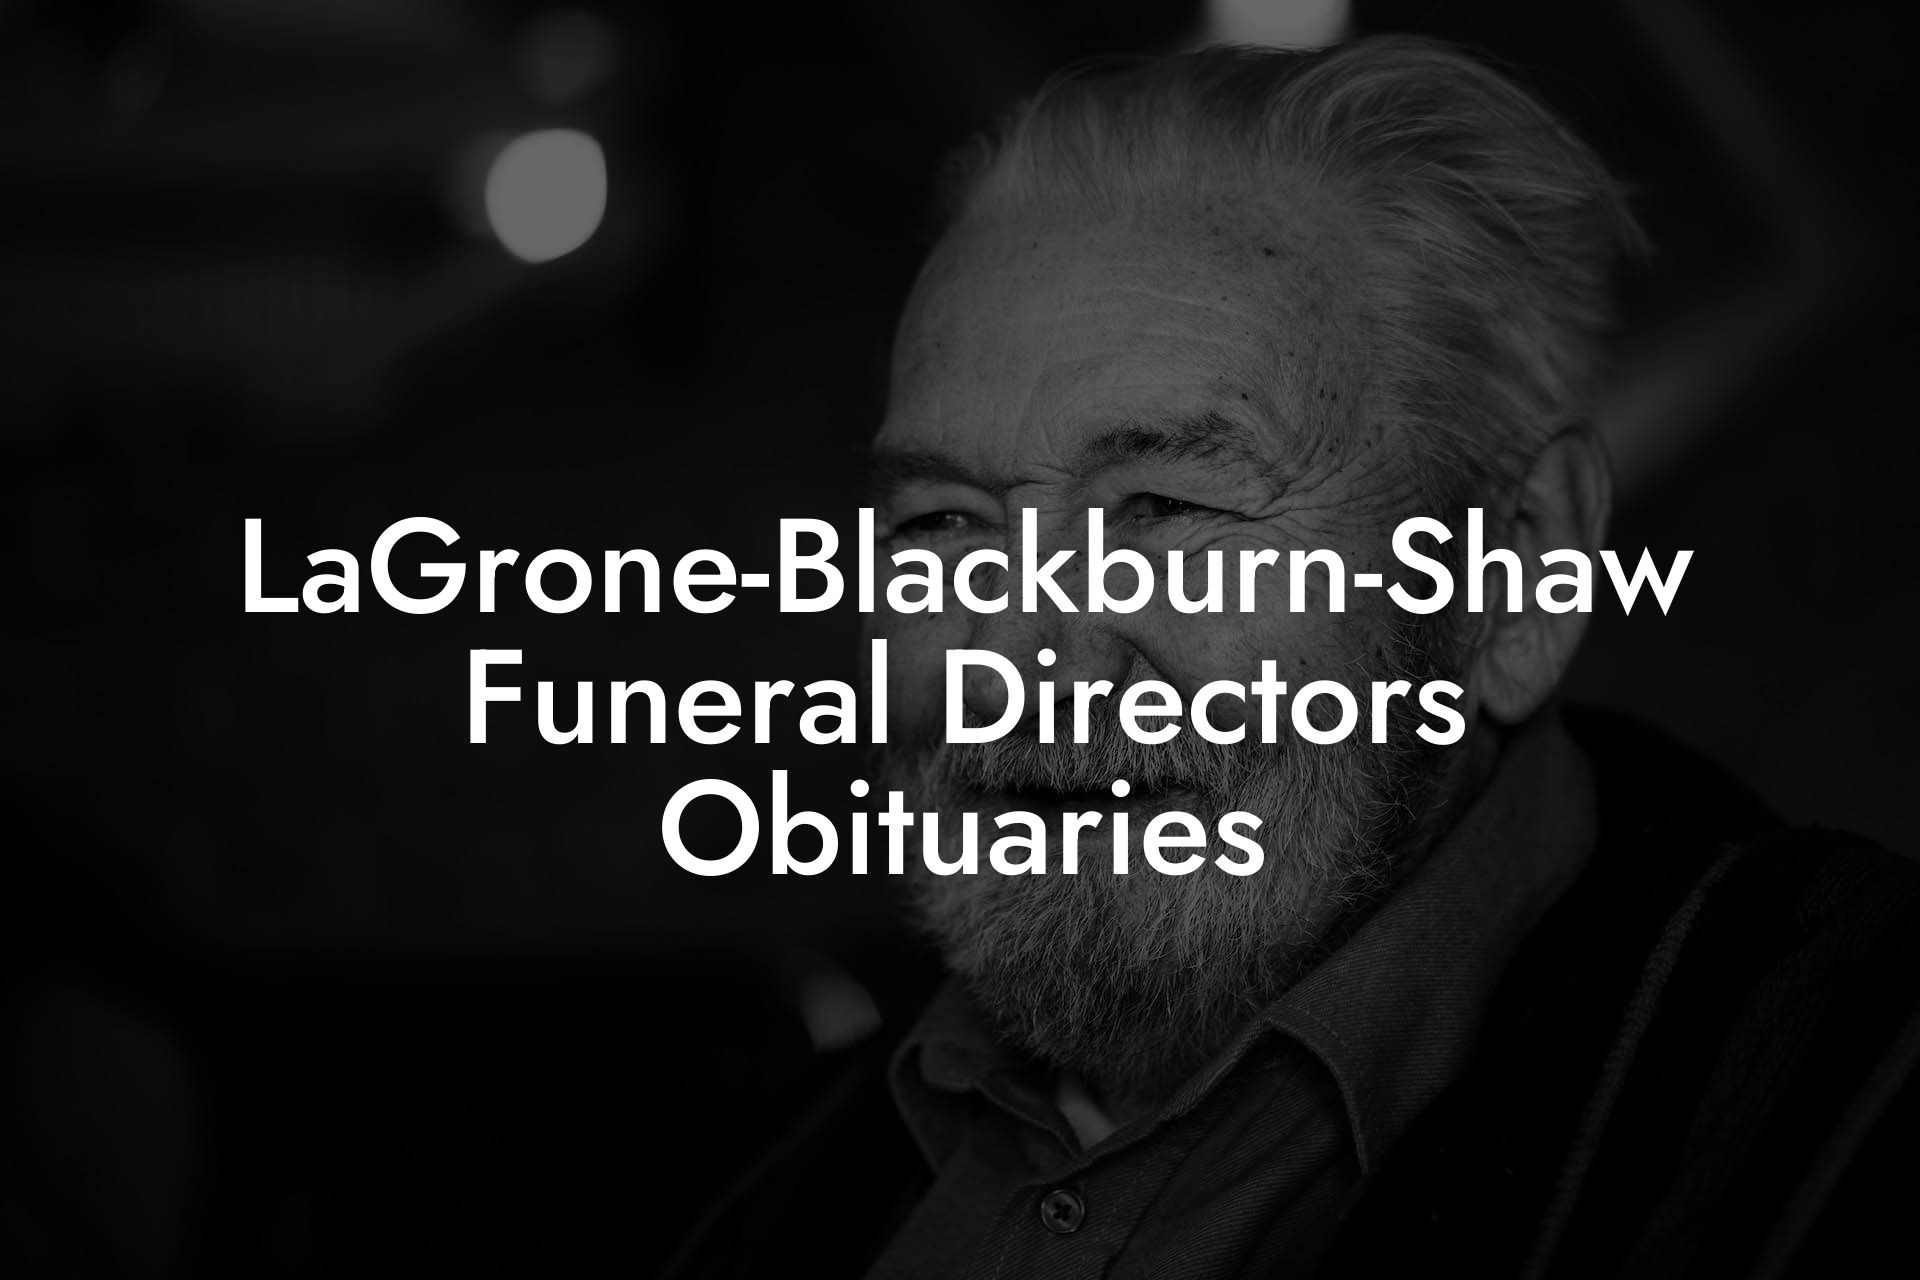 LaGrone-Blackburn-Shaw Funeral Directors Obituaries